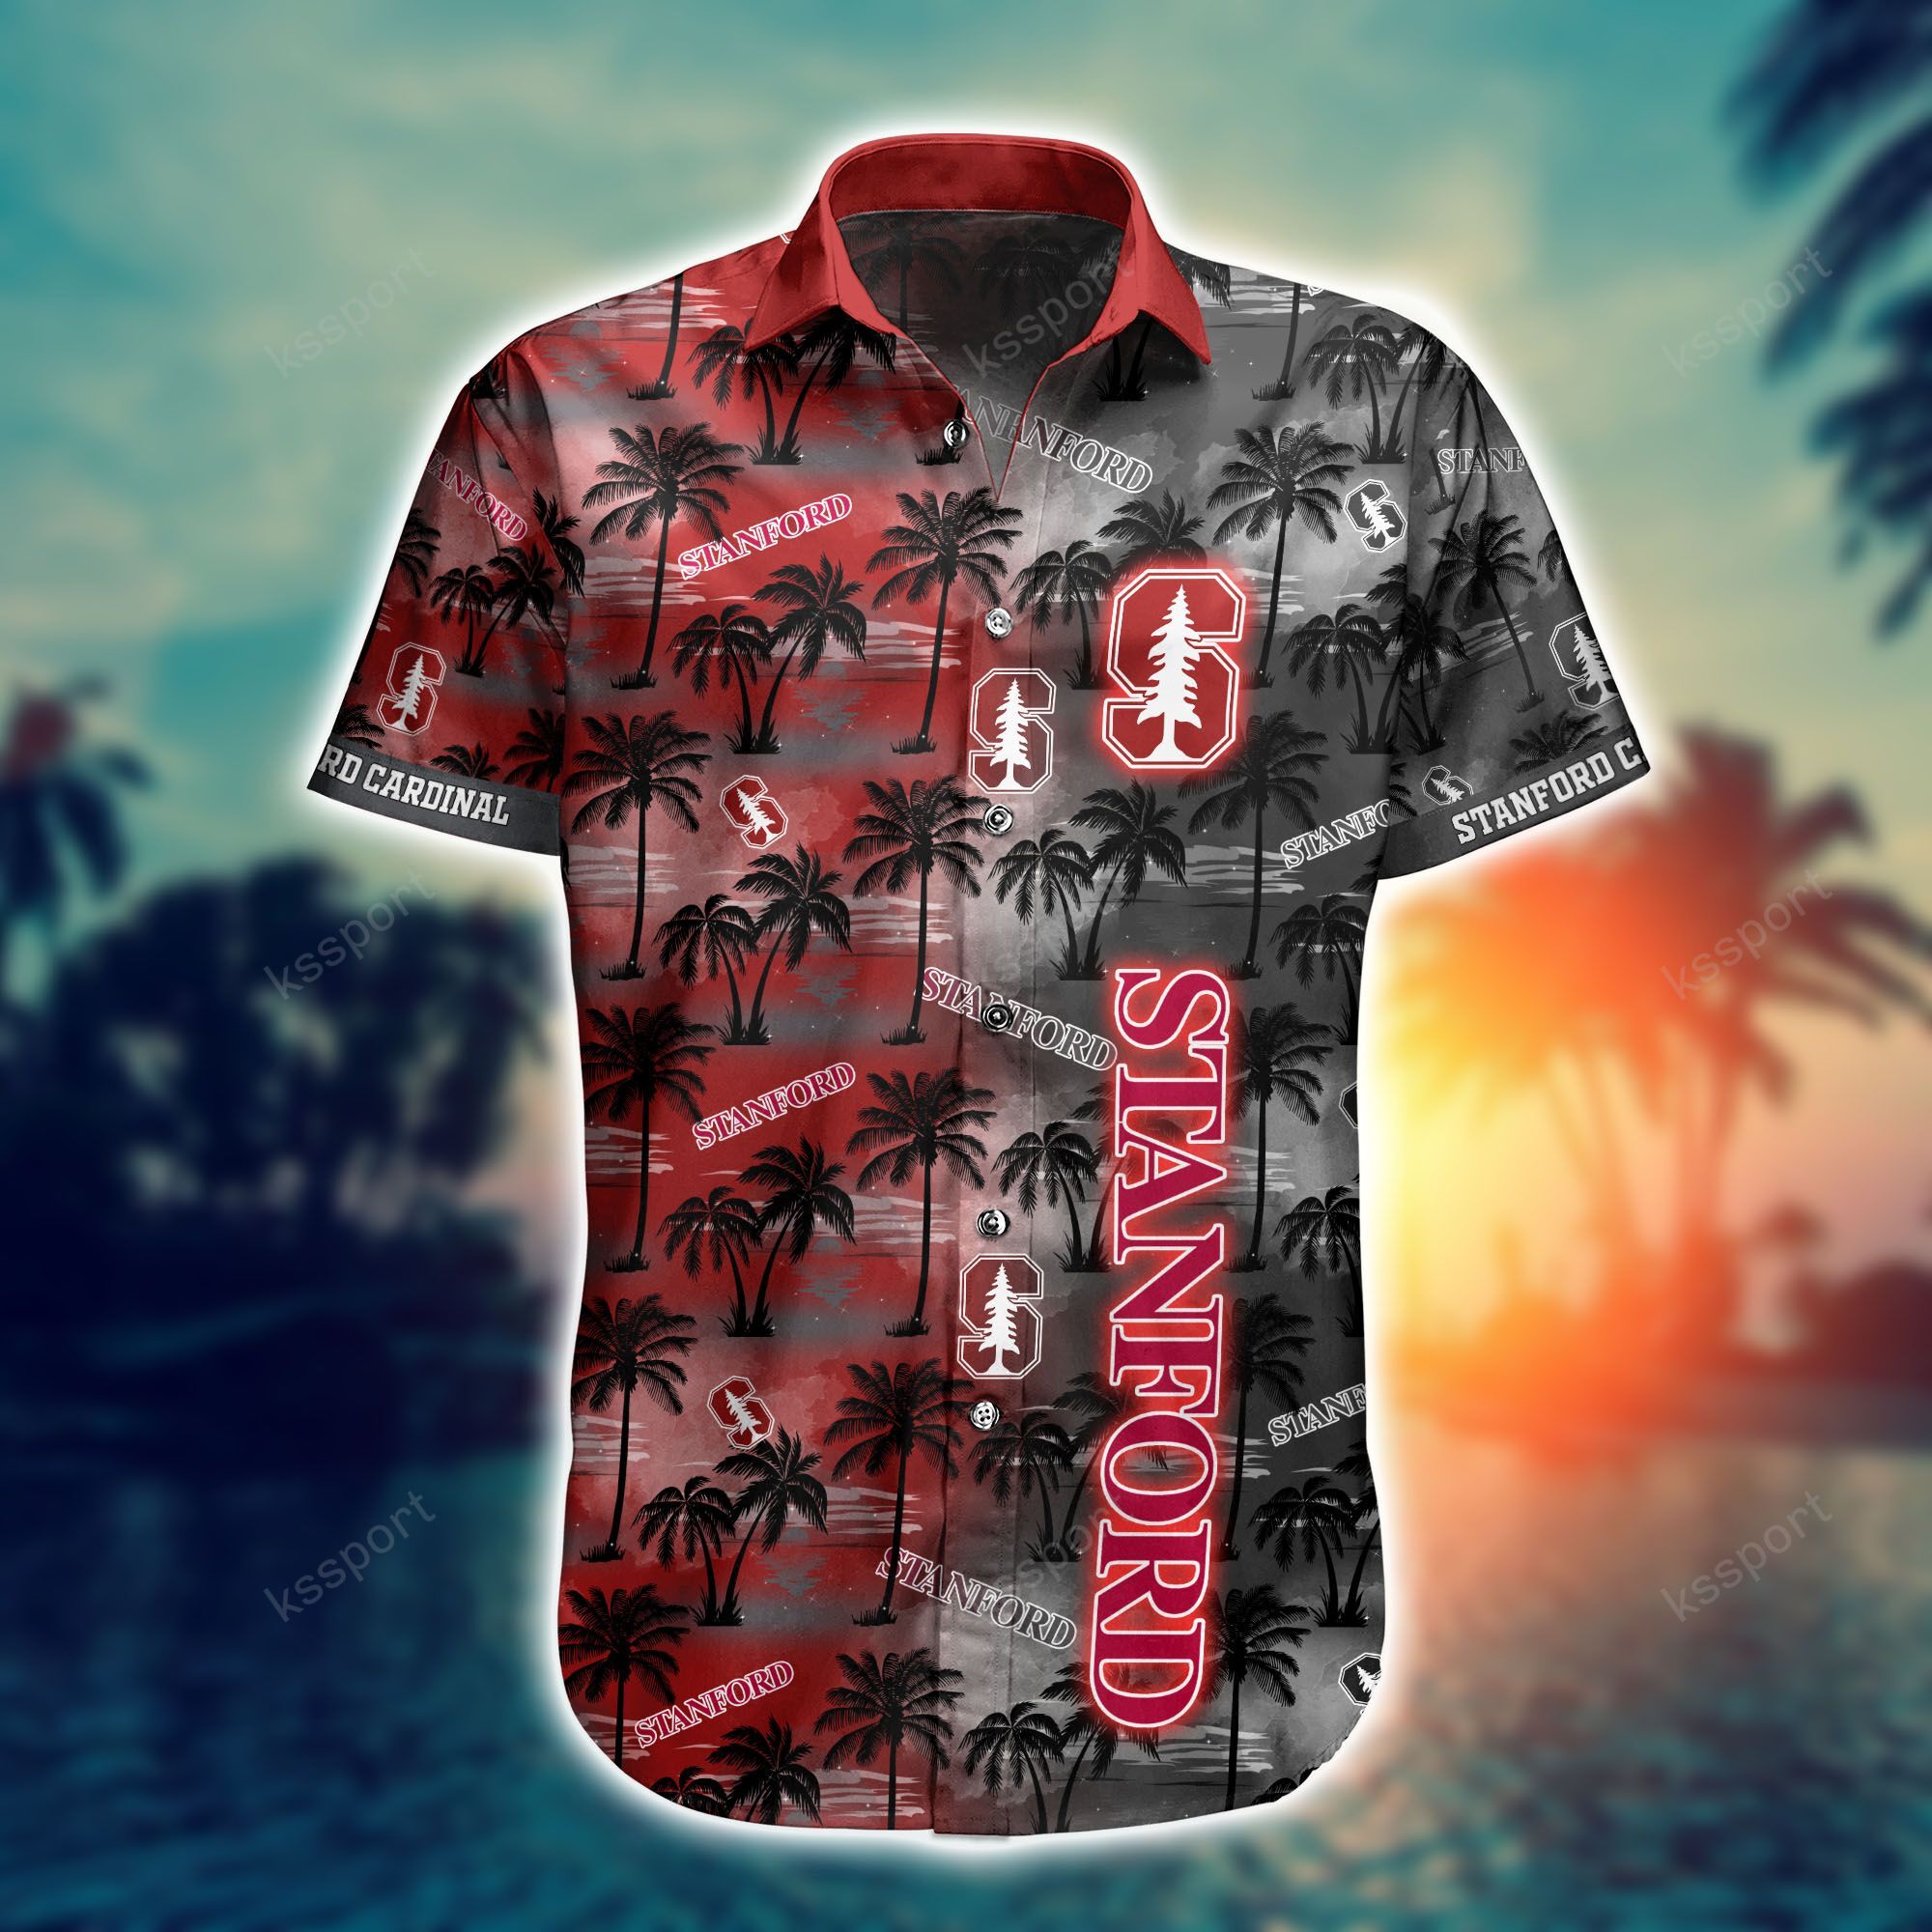 Hawaiian shirt and shorts is a great way to look stylish at a beach party 22